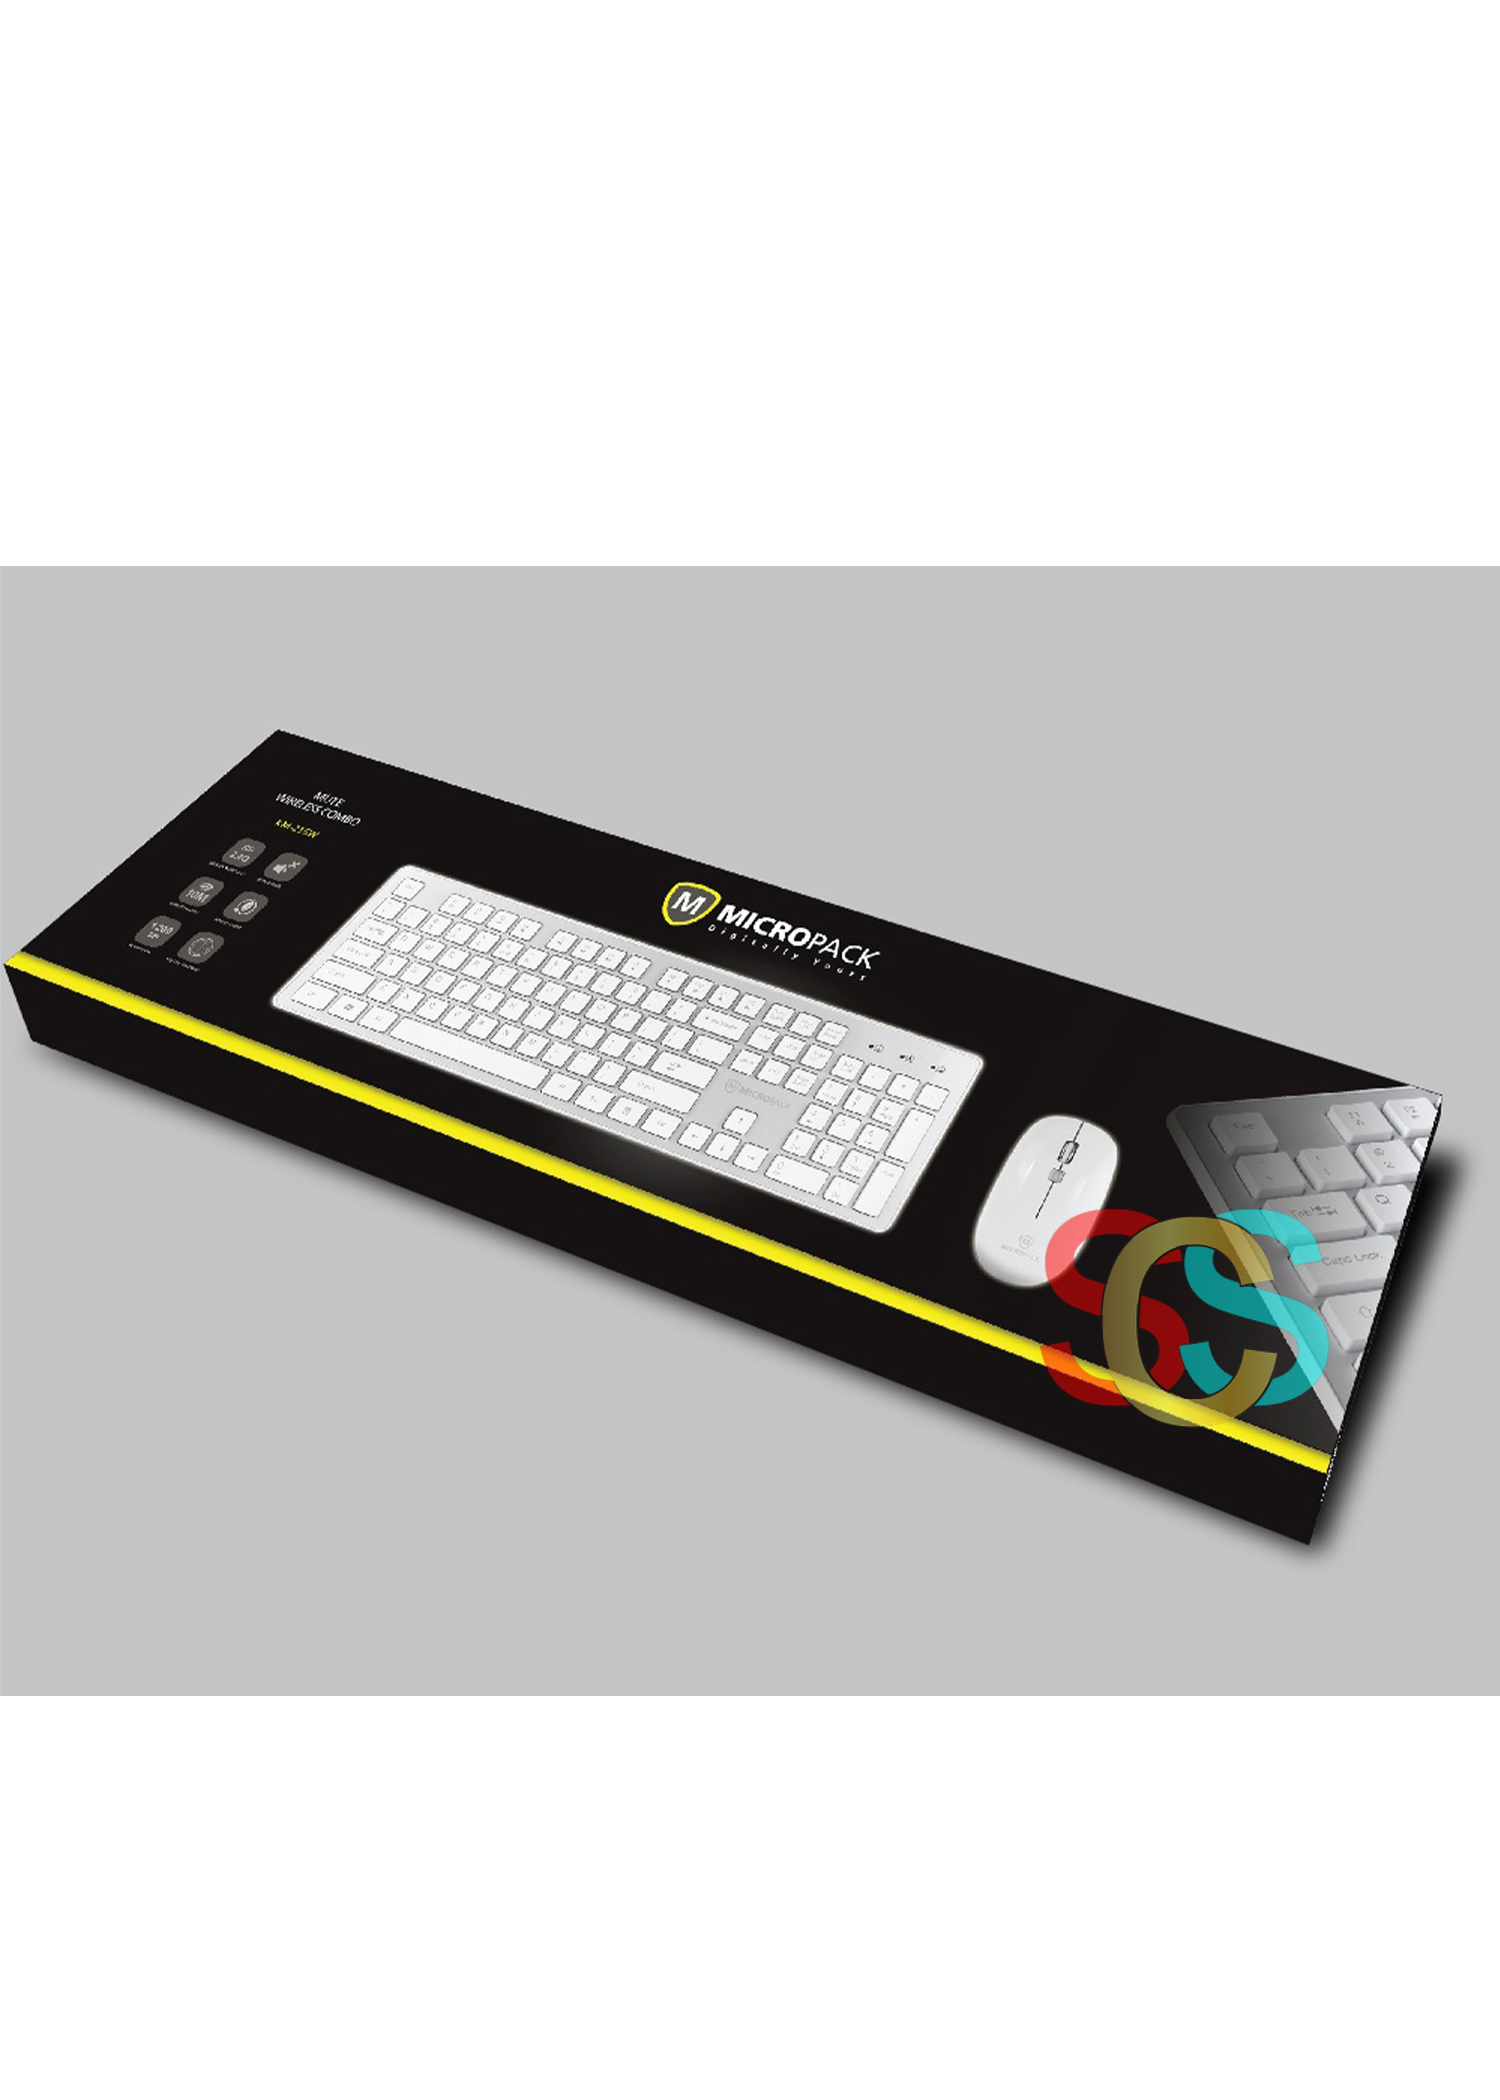 Micropack KM-236W Wireless Combo Keyboard